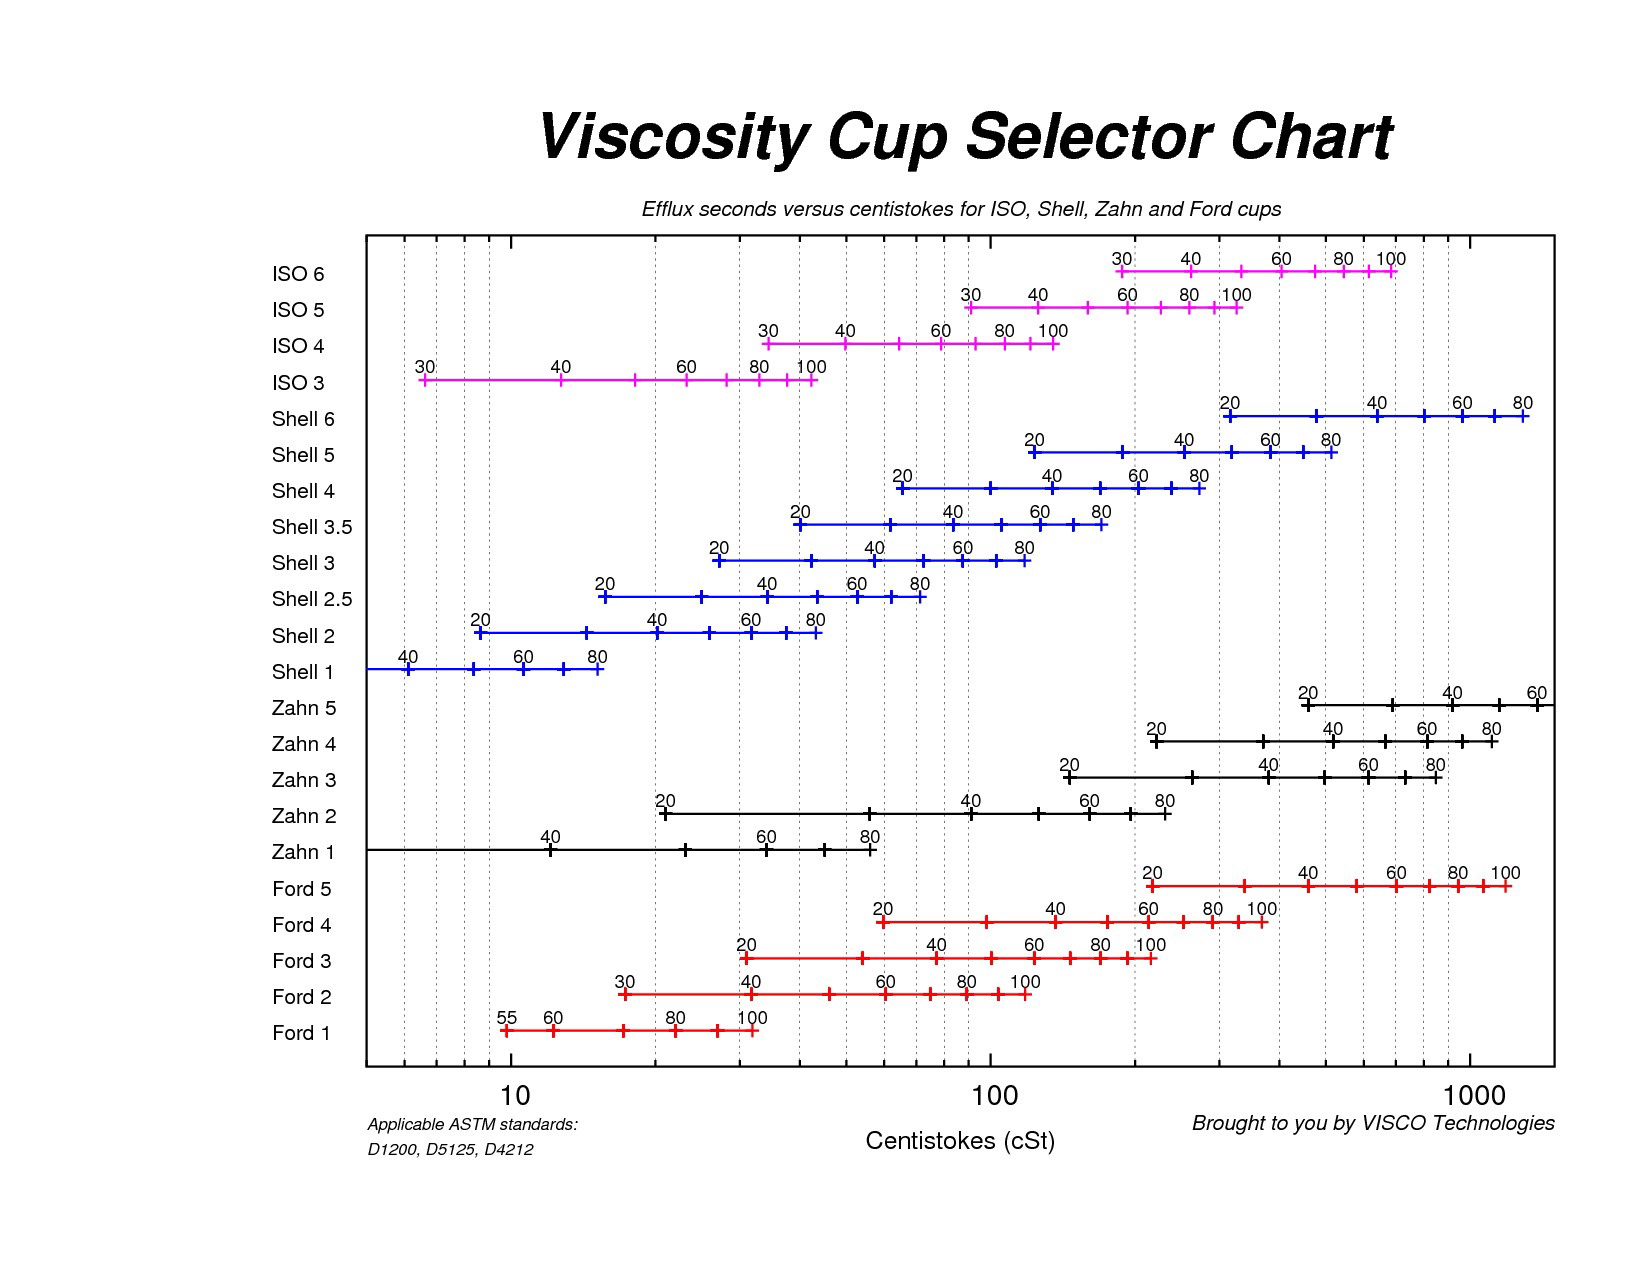 Viscosity Cup Conversion Chart